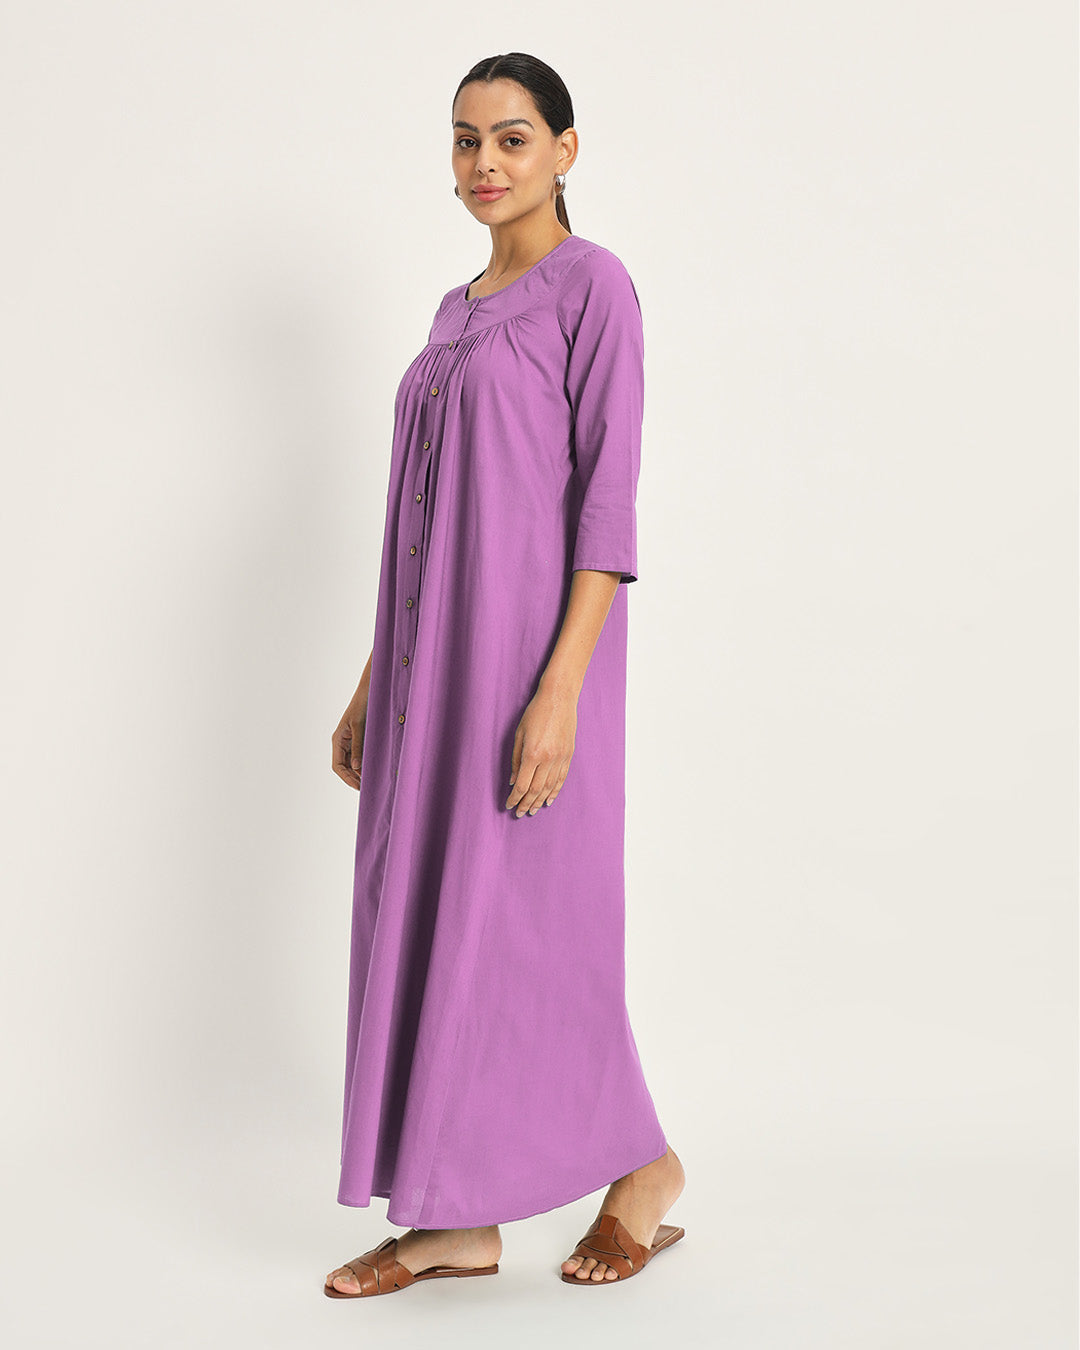 Combo: Lilac & Wisteria Purple Nighttime Must-Have Nightdress